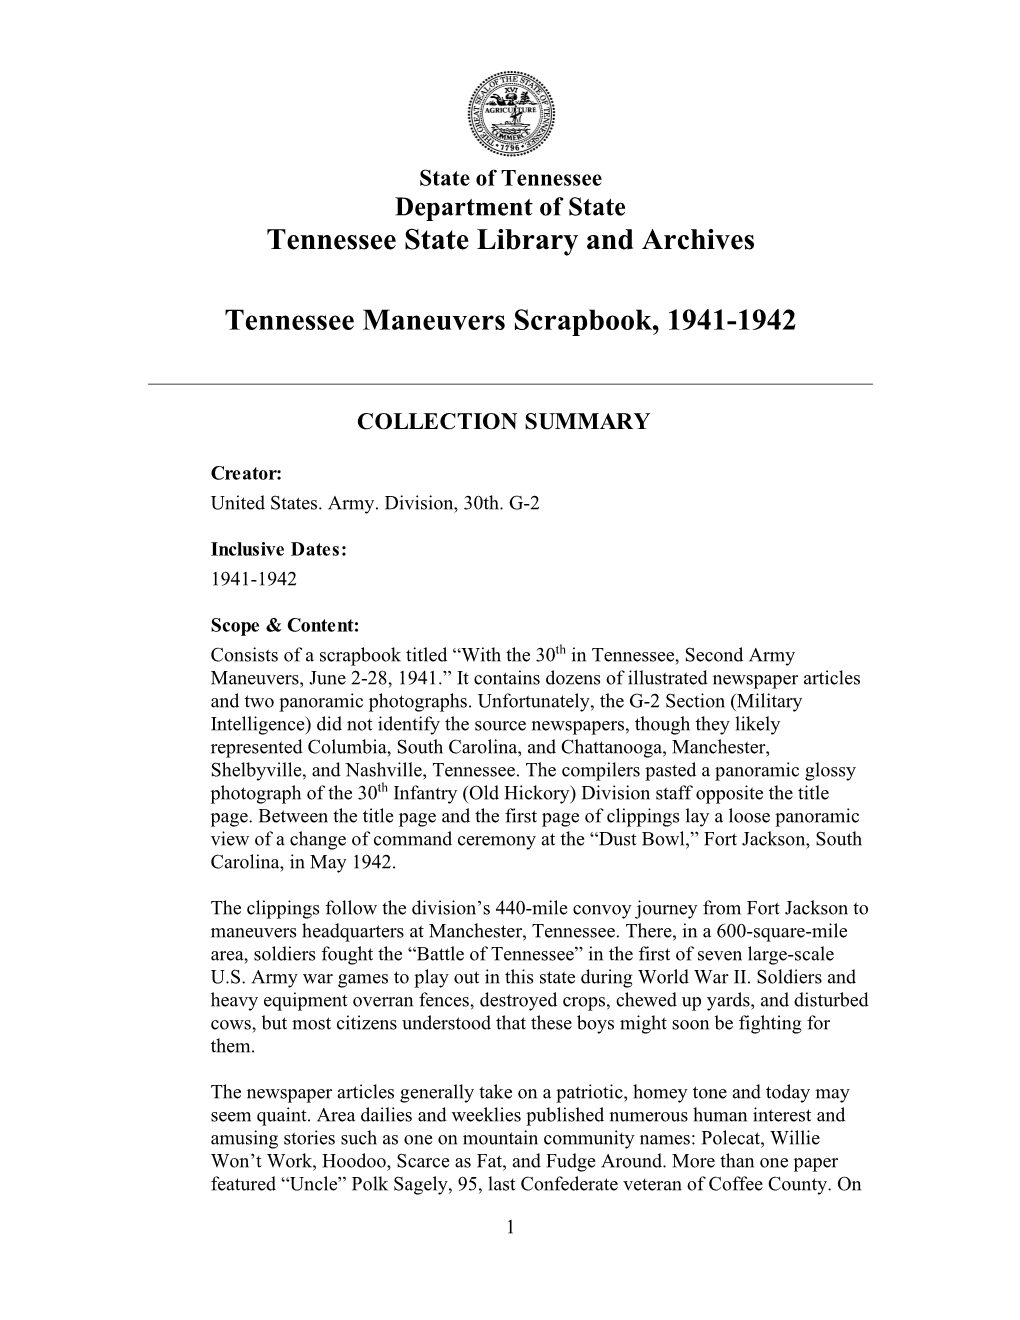 Tennessee Maneuvers Scrapbook, 1941-1942